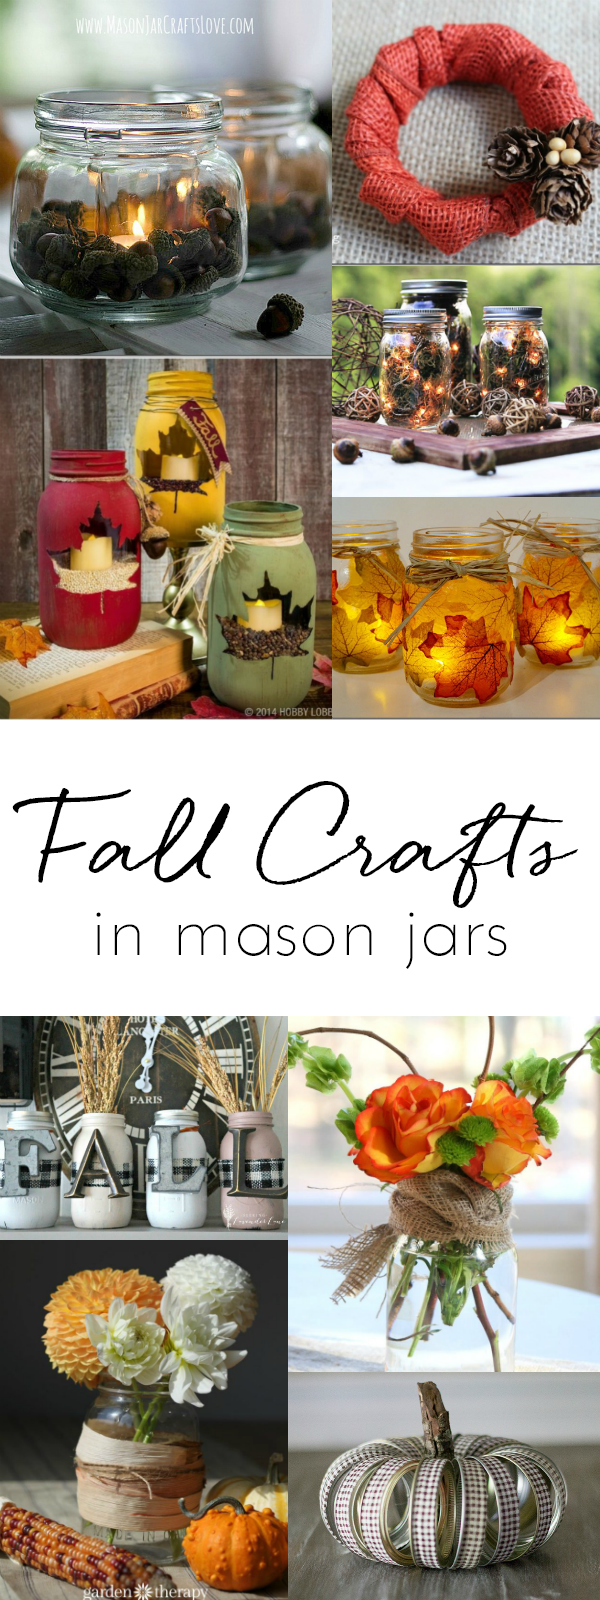 Fall Mason Jar Crafts - Craft Ideas for Fall using Mason Jars